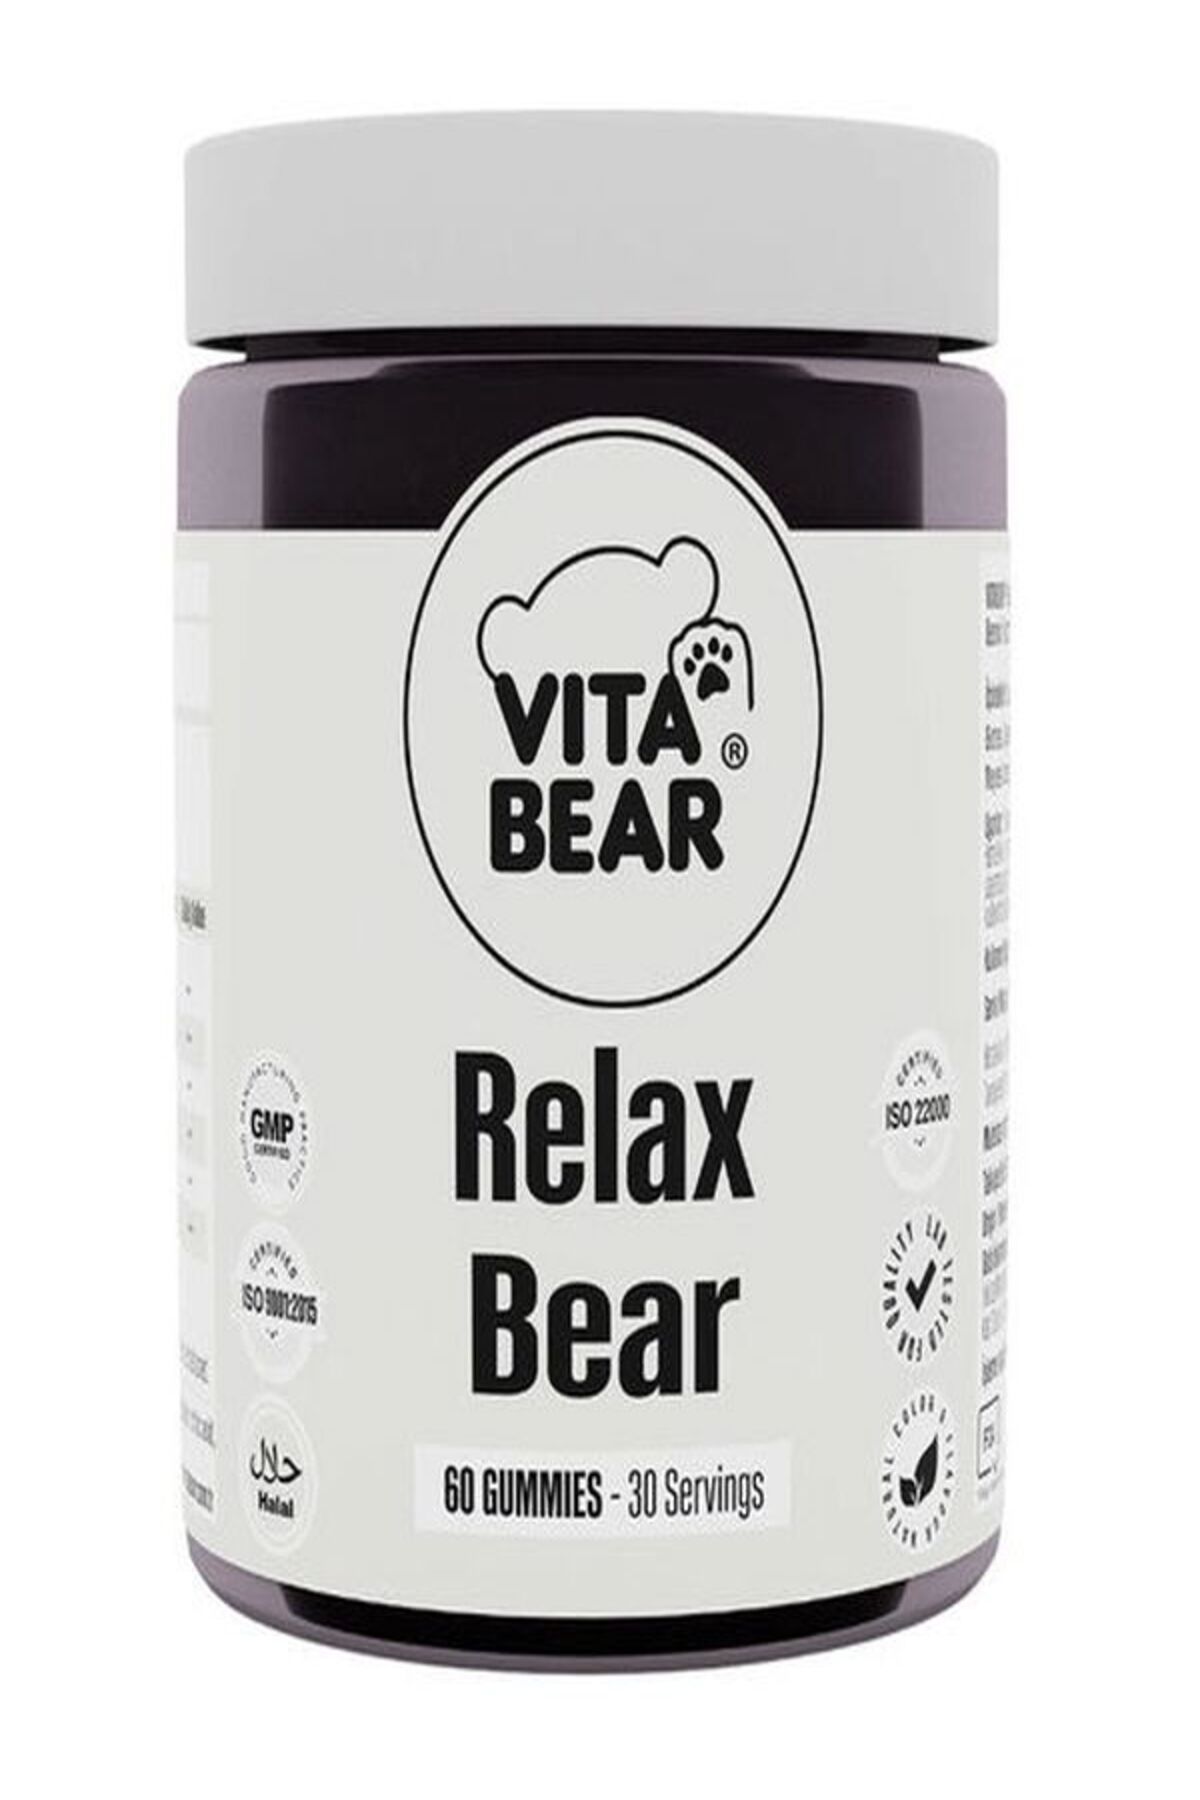 Vita Bear Relax Bear-60 Gummies